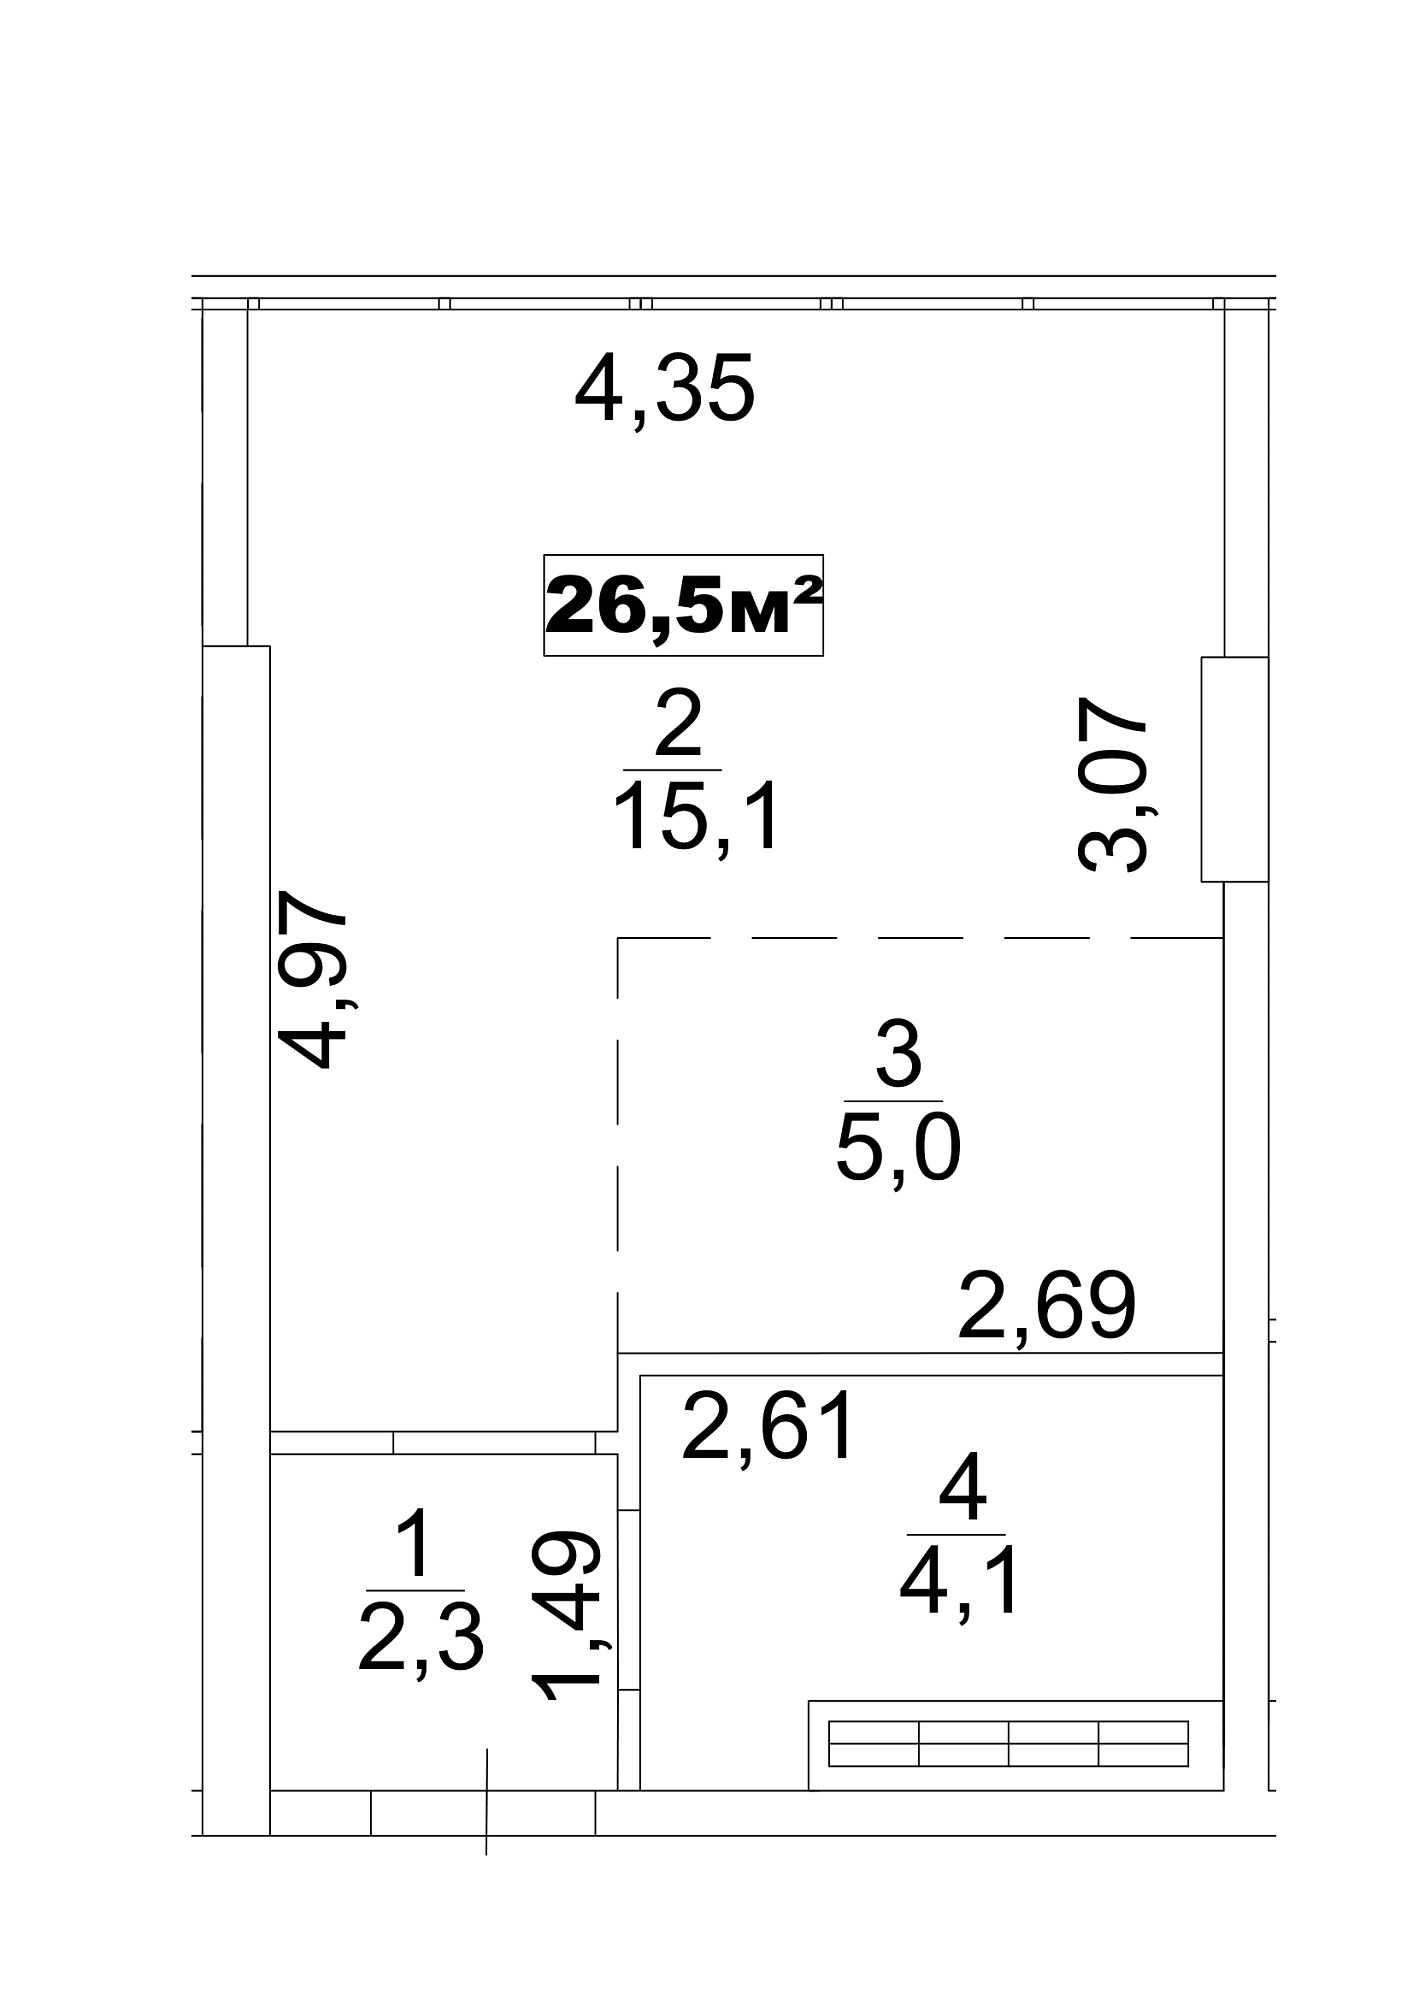 Planning Smart flats area 26.5m2, AB-13-04/0027в.